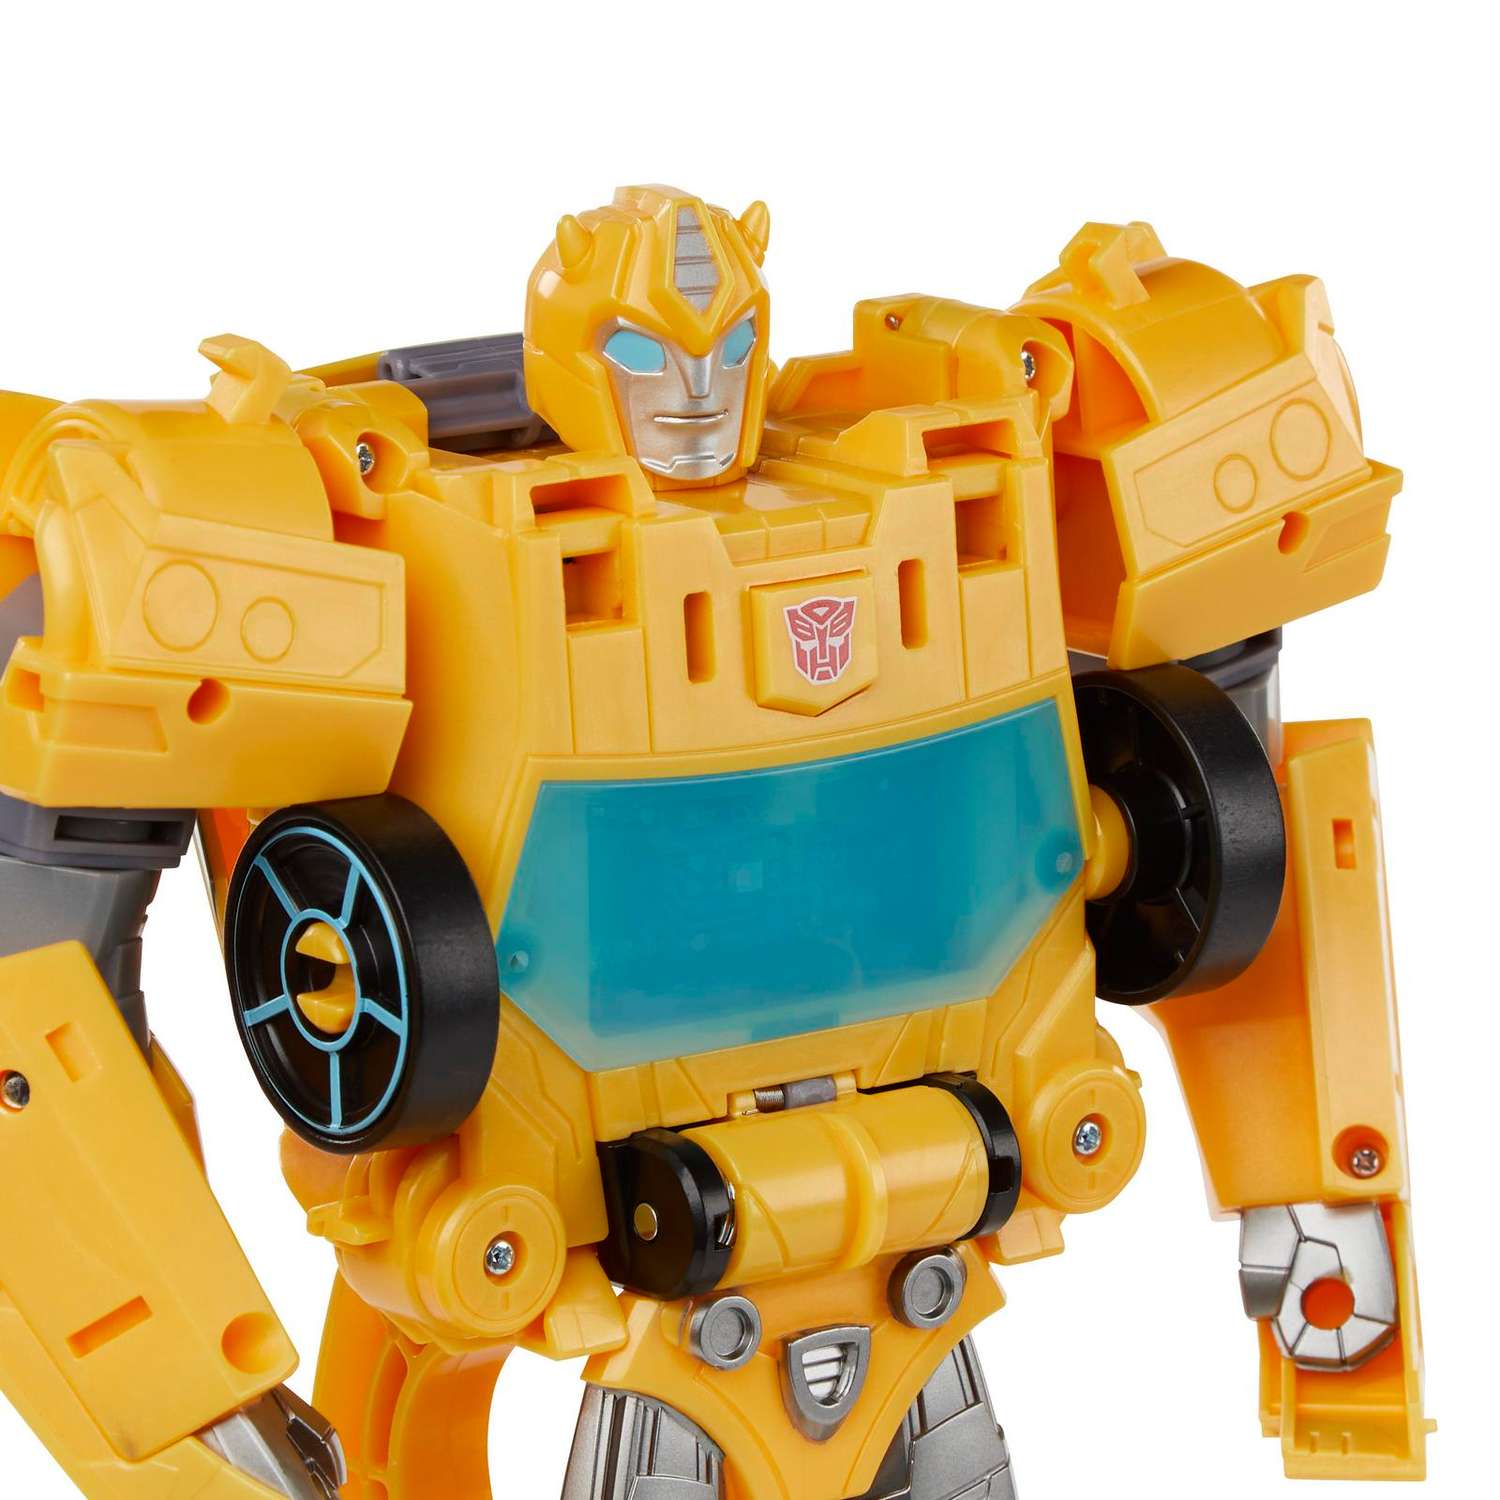 Фигурка Transformers Бамблби с автоматической трансформацией F27305X6 - фото 20